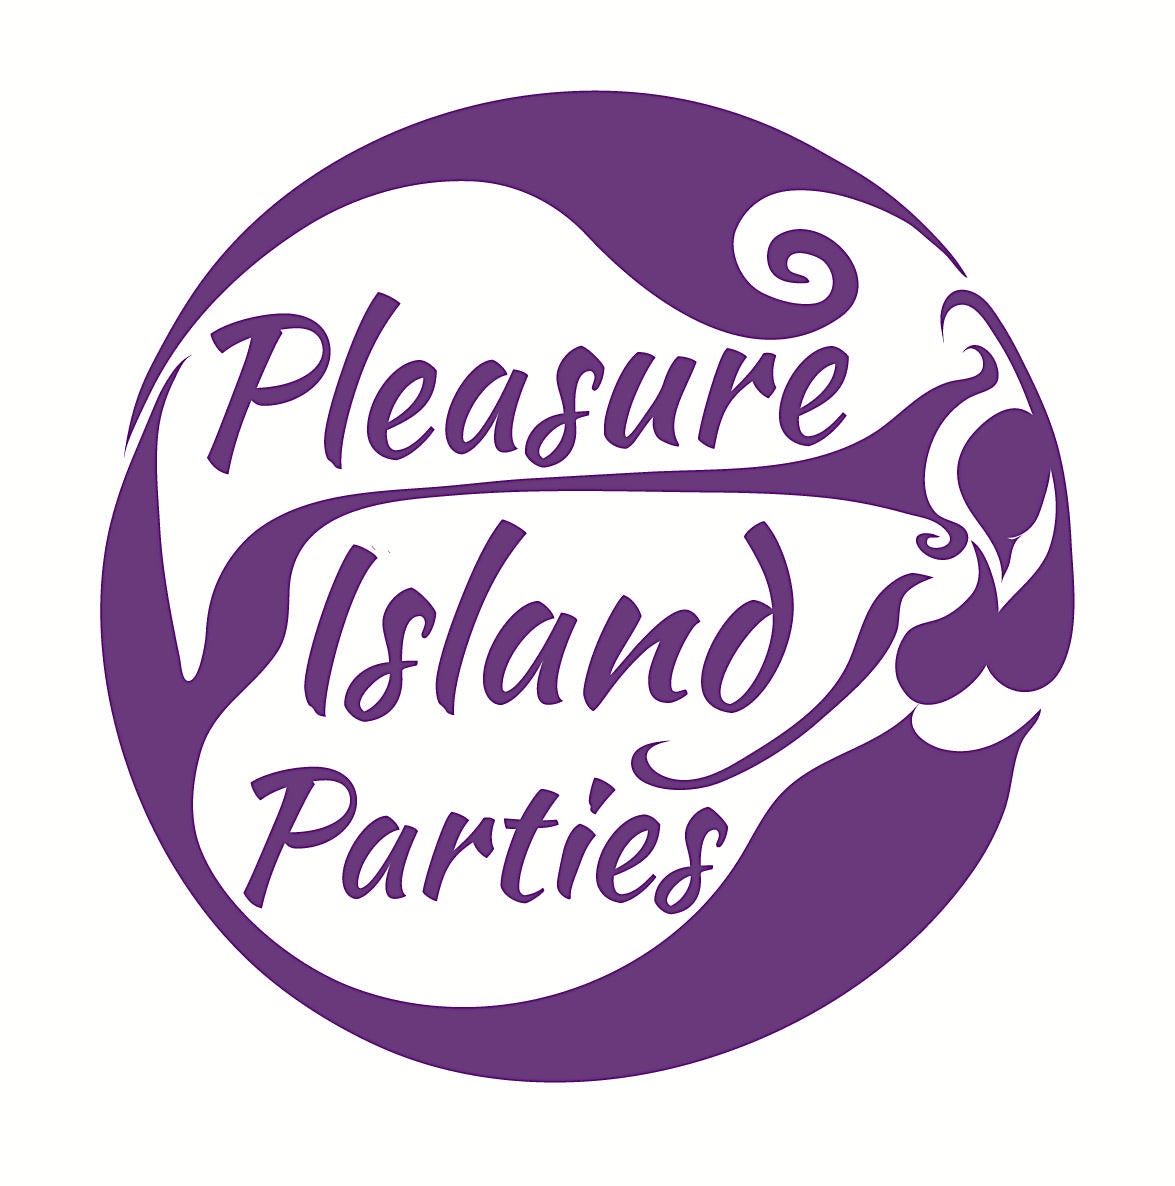 Pleasure Island - Friday 5th July - London